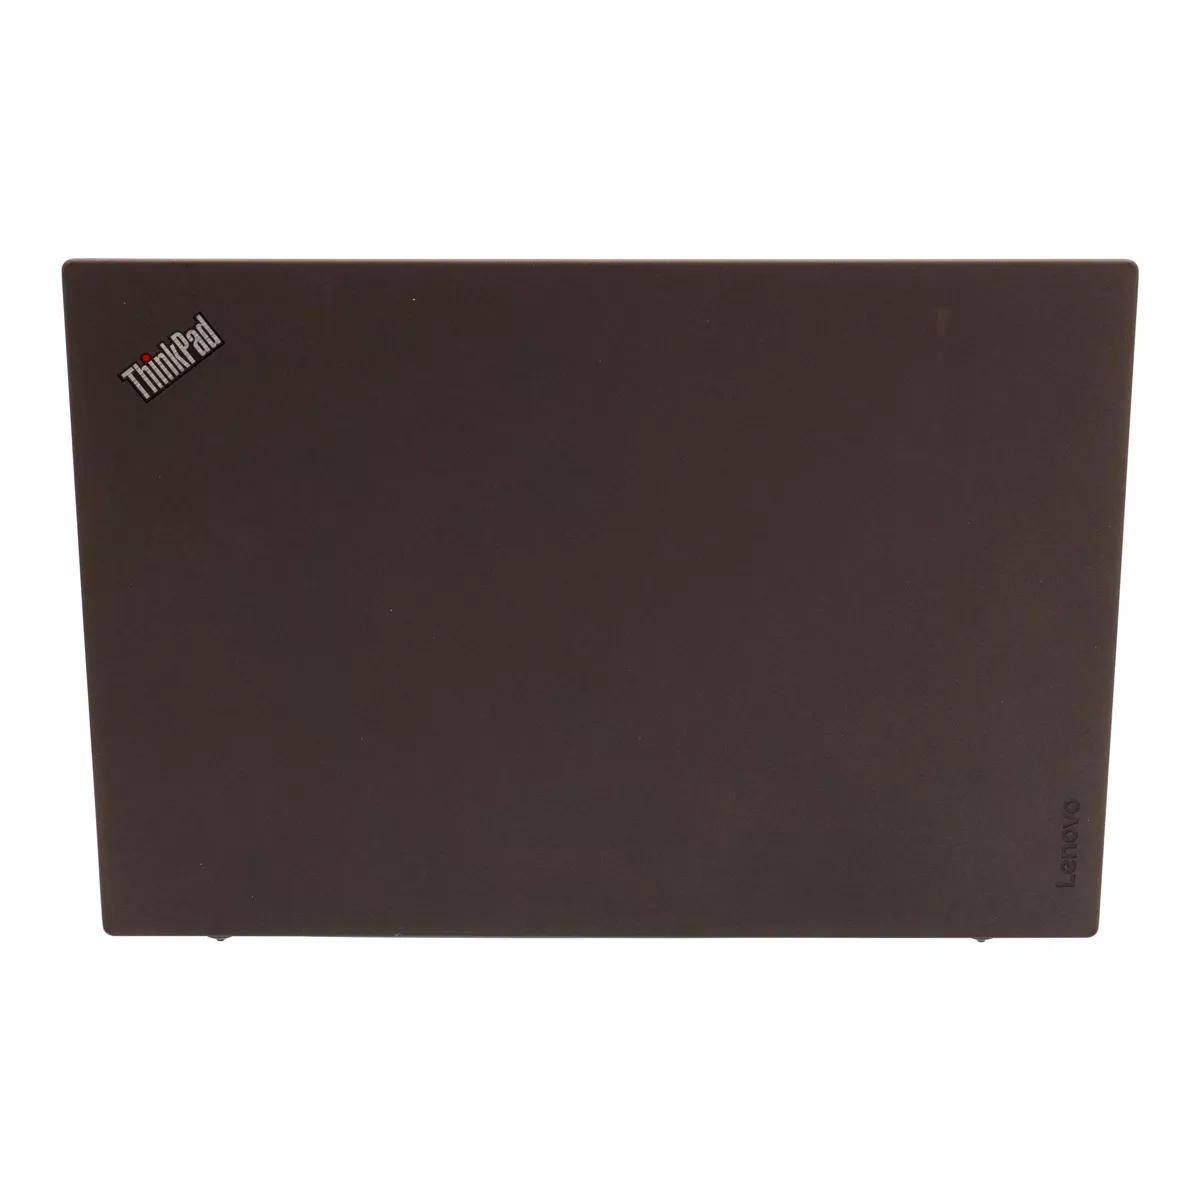 Lenovo ThinkPad T460 Core i5 6200U Full-HD 240 GB SSD Webcam B